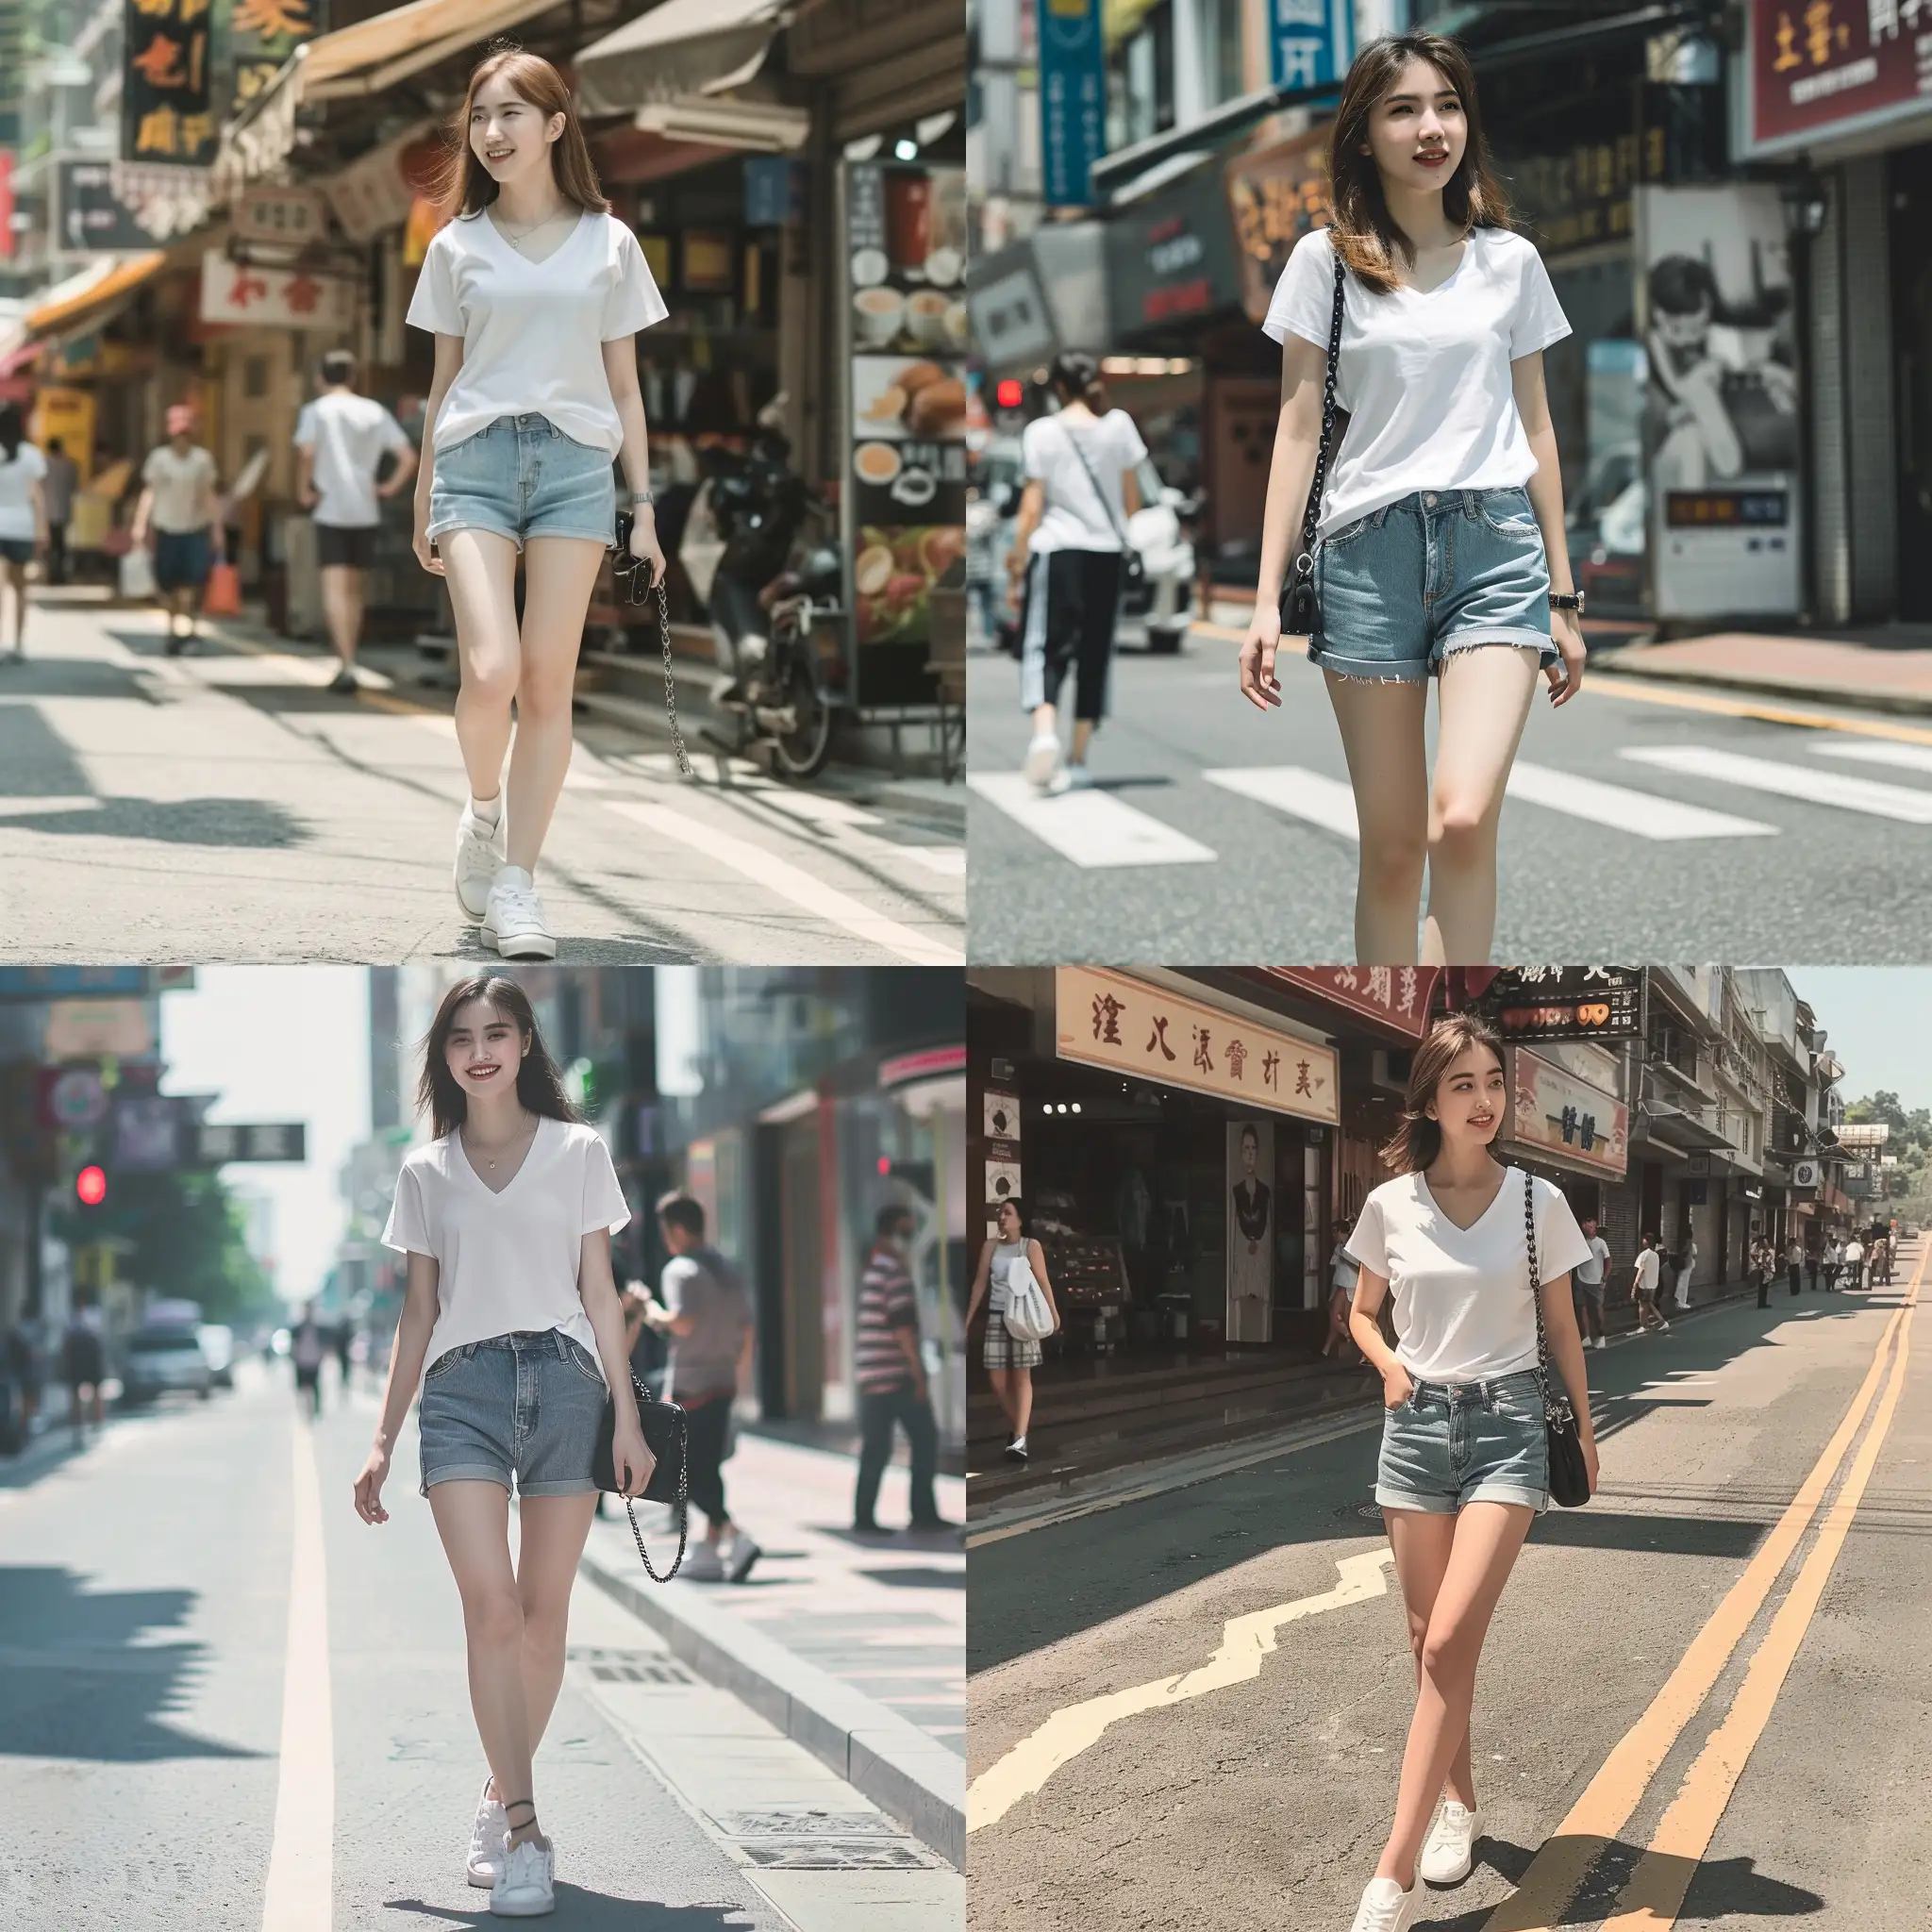 Elegant-Summer-Stroll-Girl-in-Fitted-White-Tshirt-and-Denim-Shorts